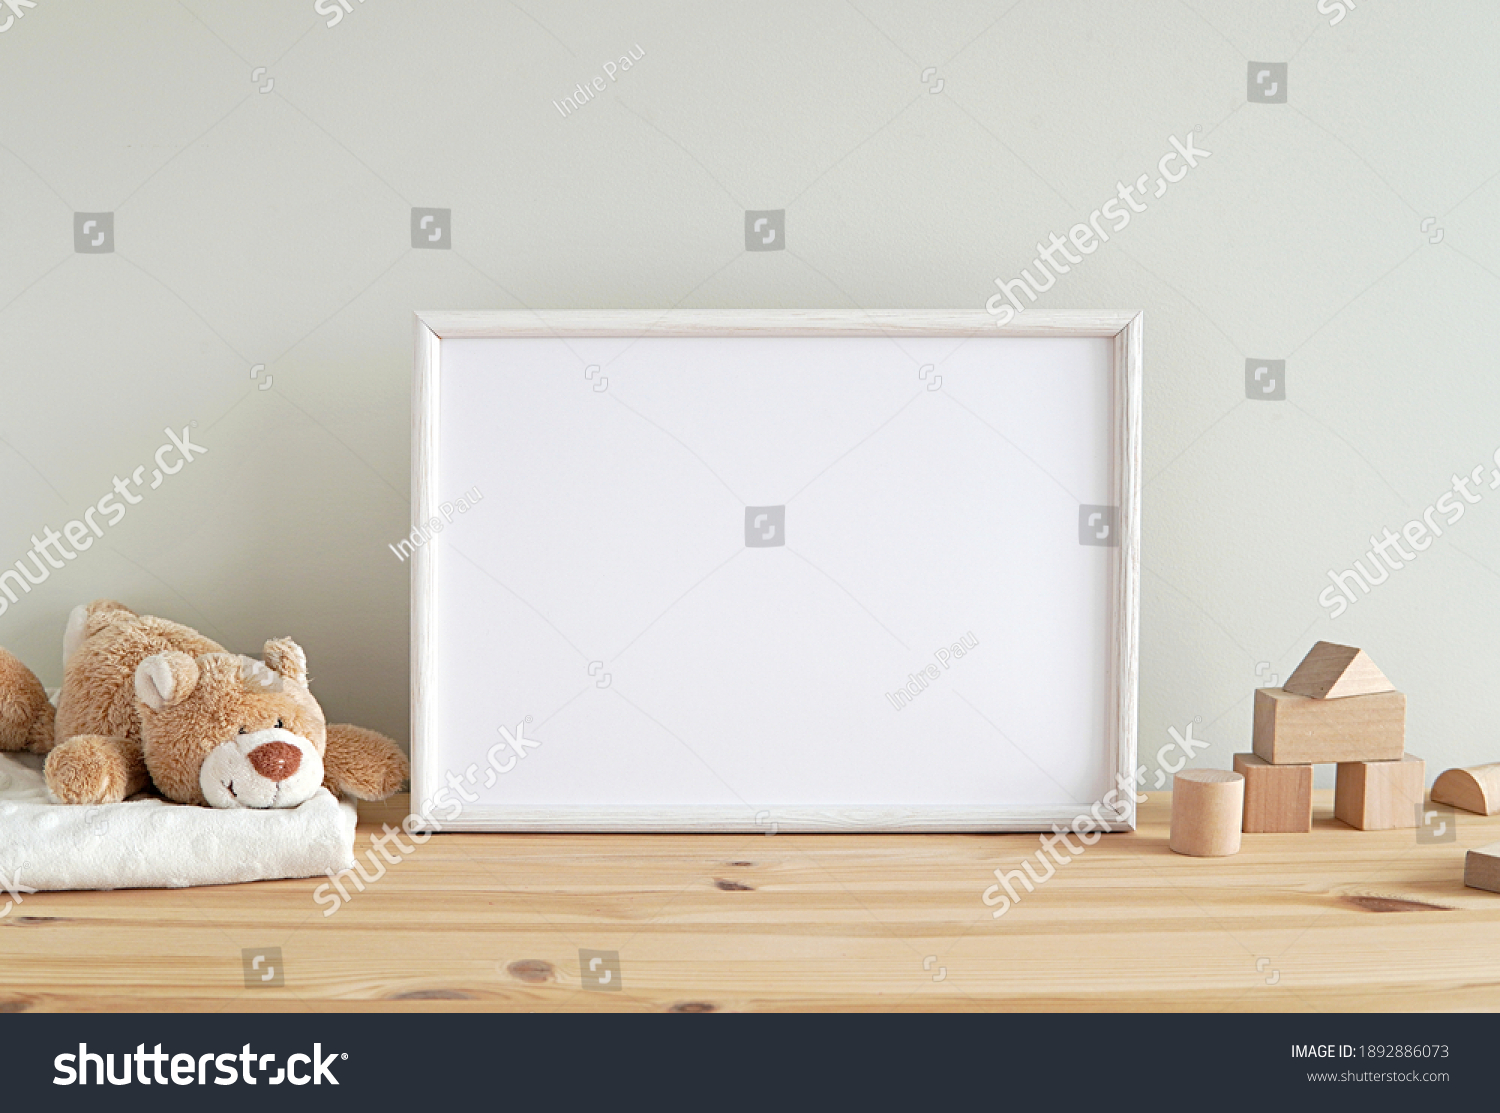 Blank horizontal frame mockup, nursery framed wall art, baby room art, empty frame for print, photo, wooden shelf, baby toys and blanket.   #1892886073